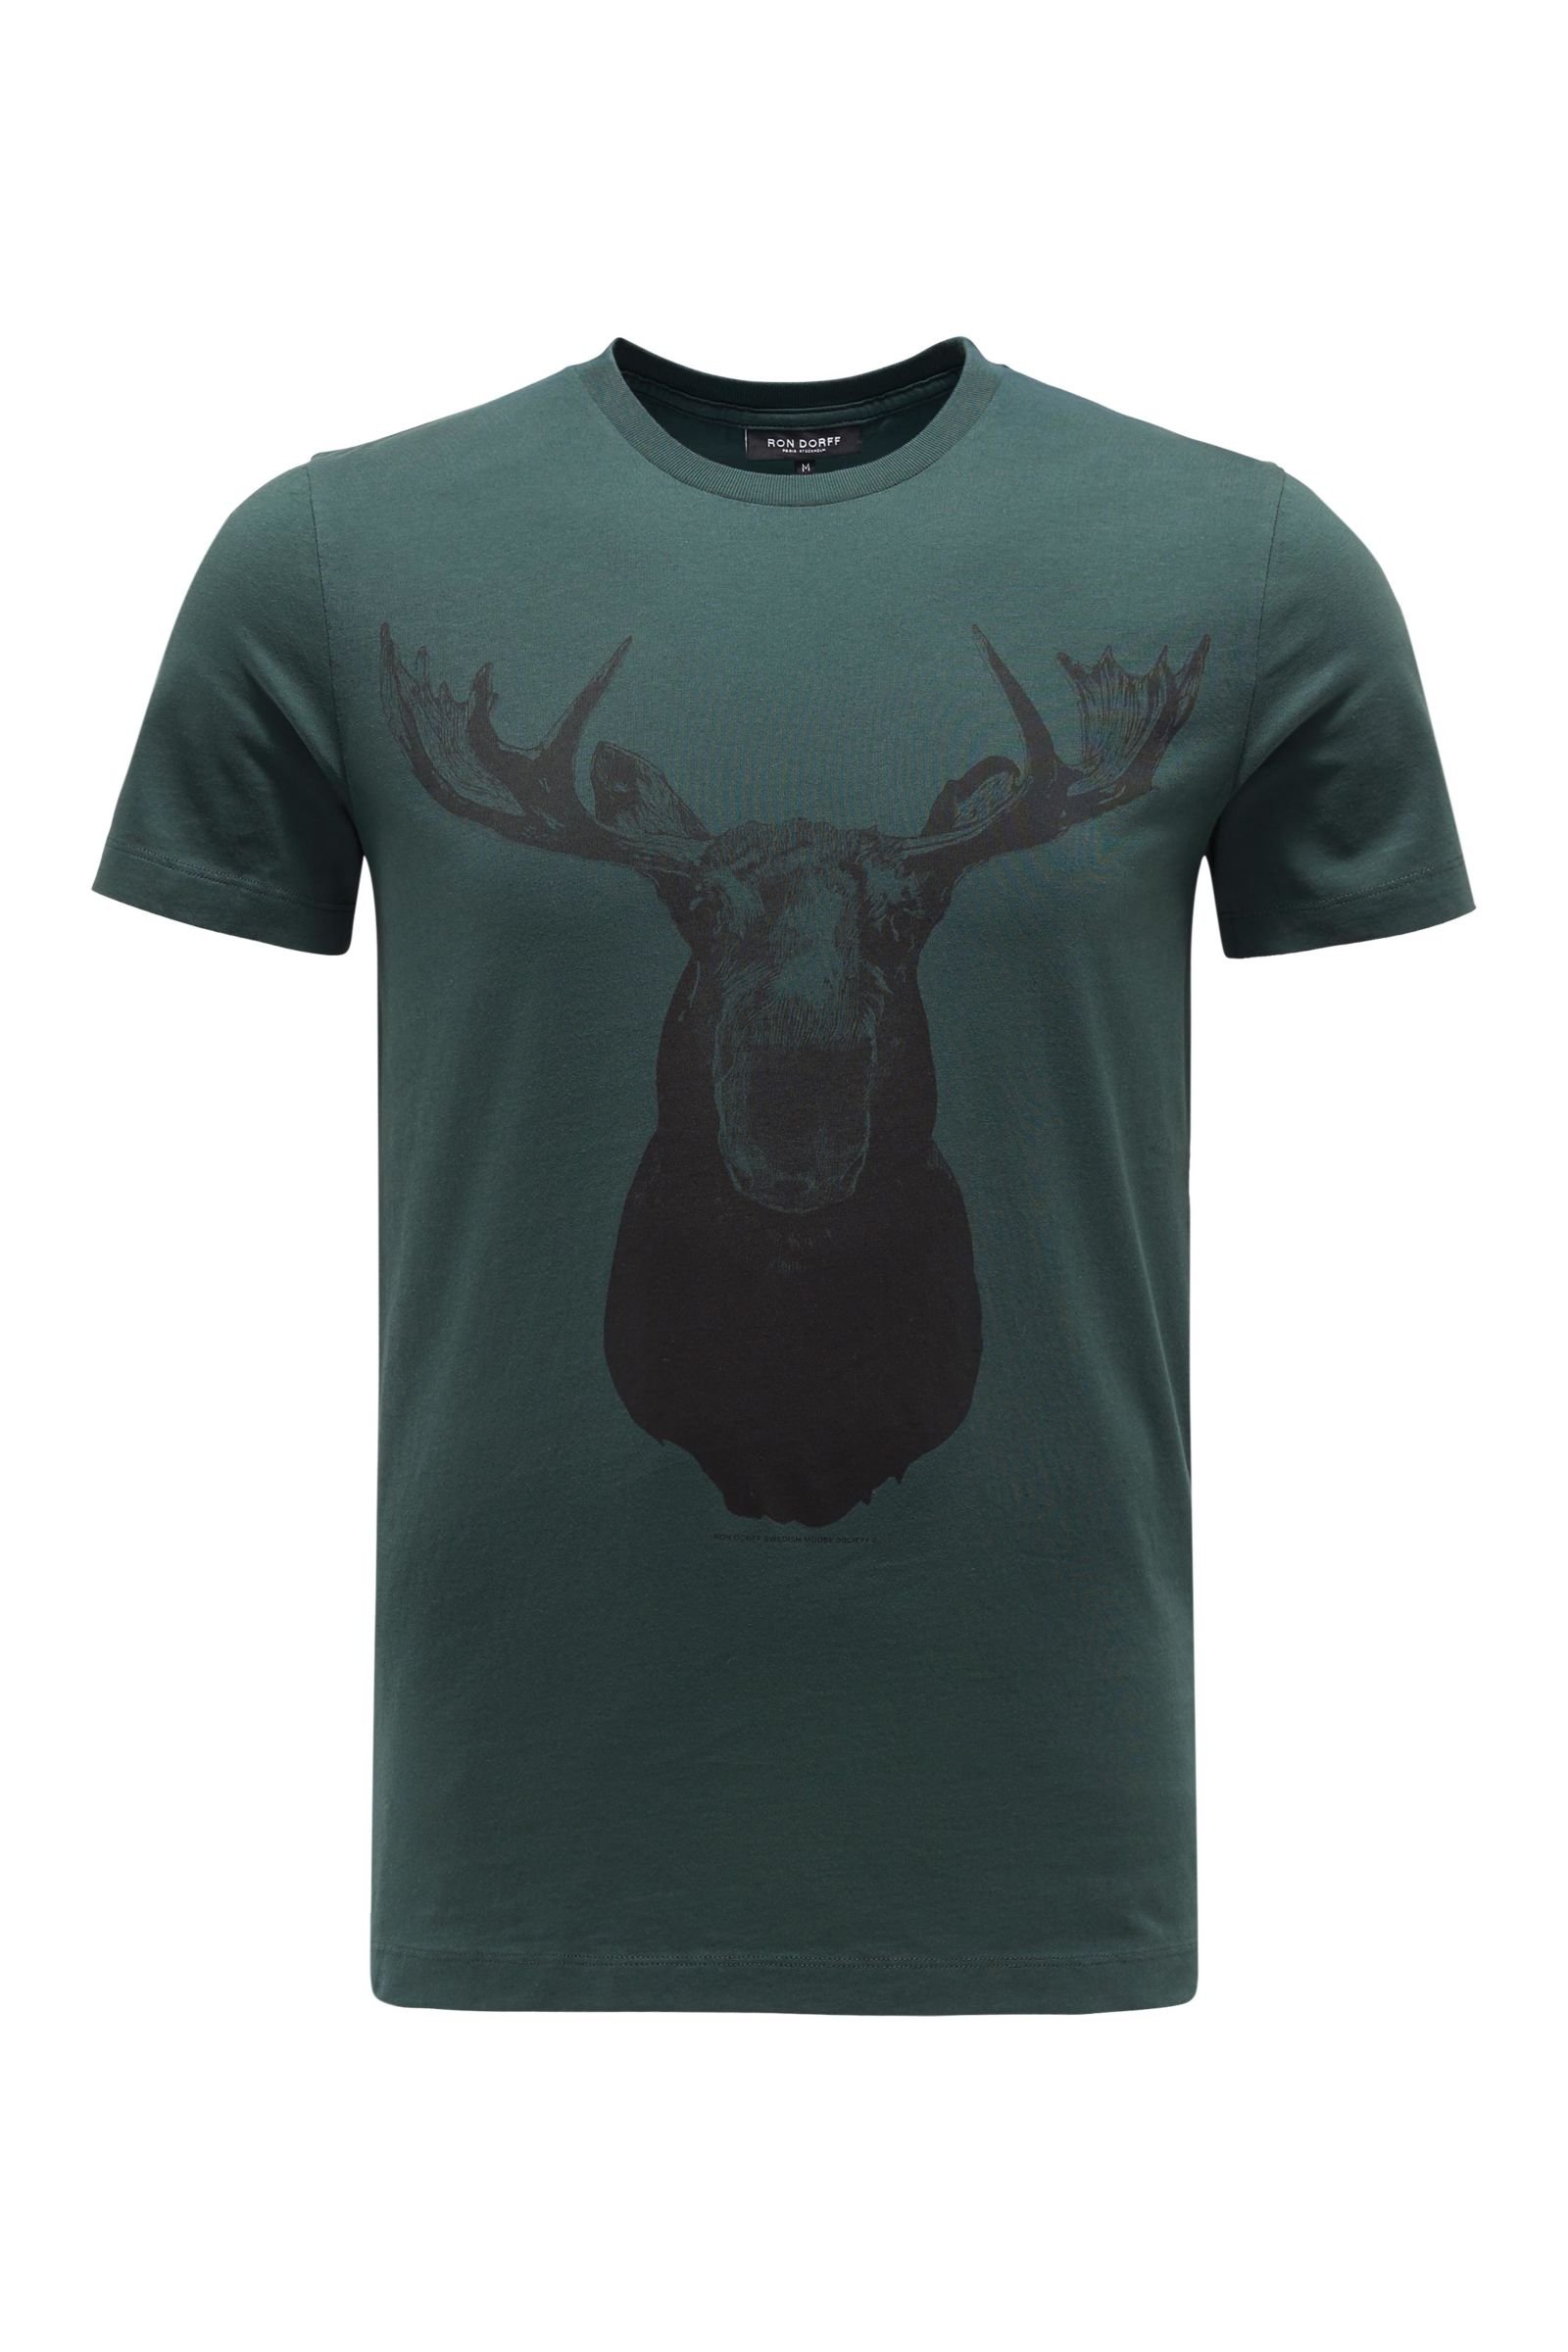 Crew neck T-shirt 'Moose' dark green